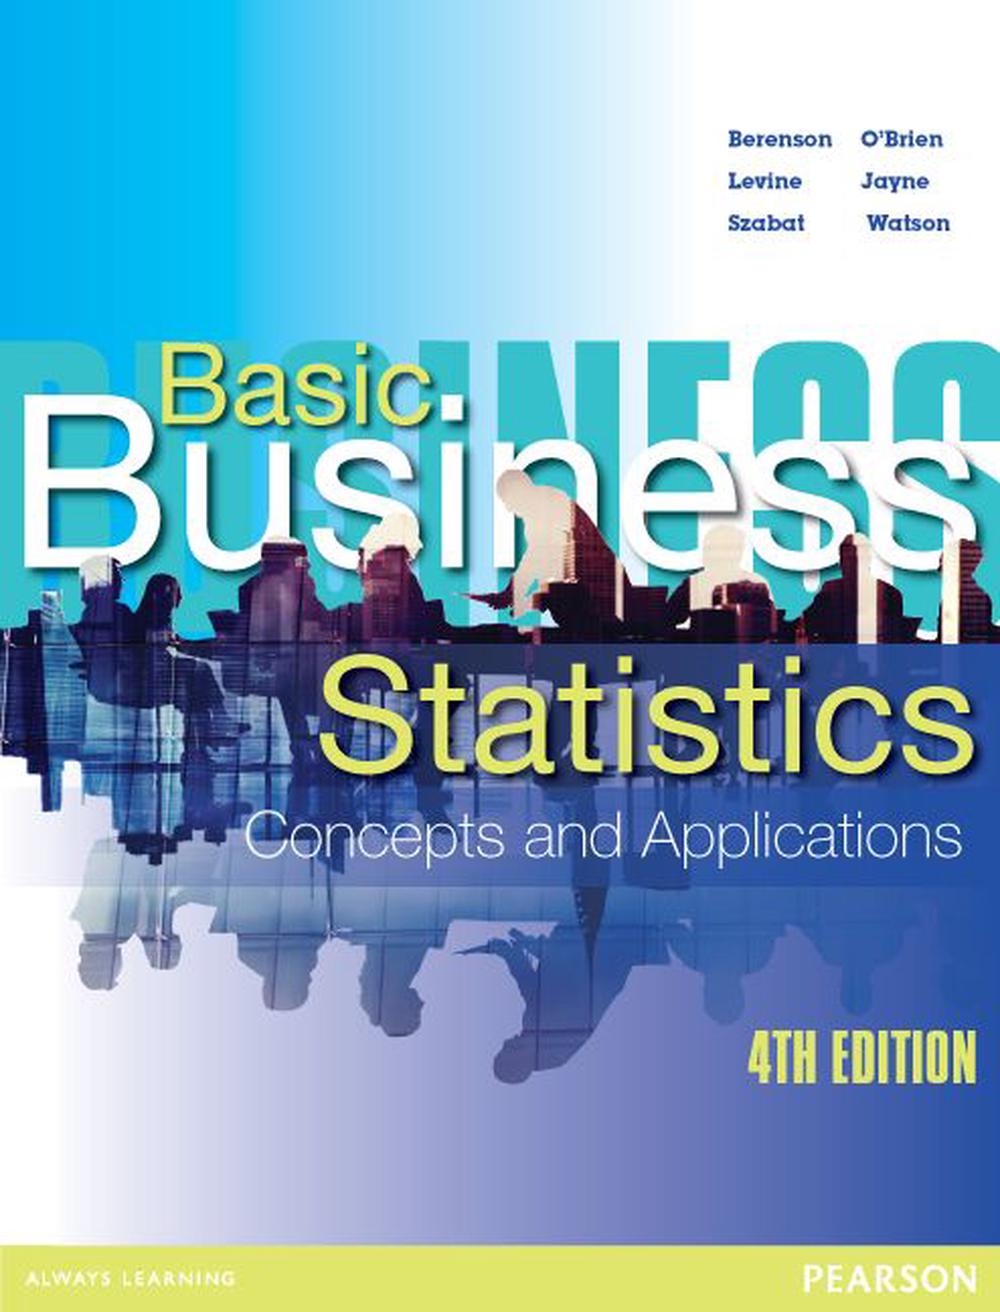 assignment of business statistics